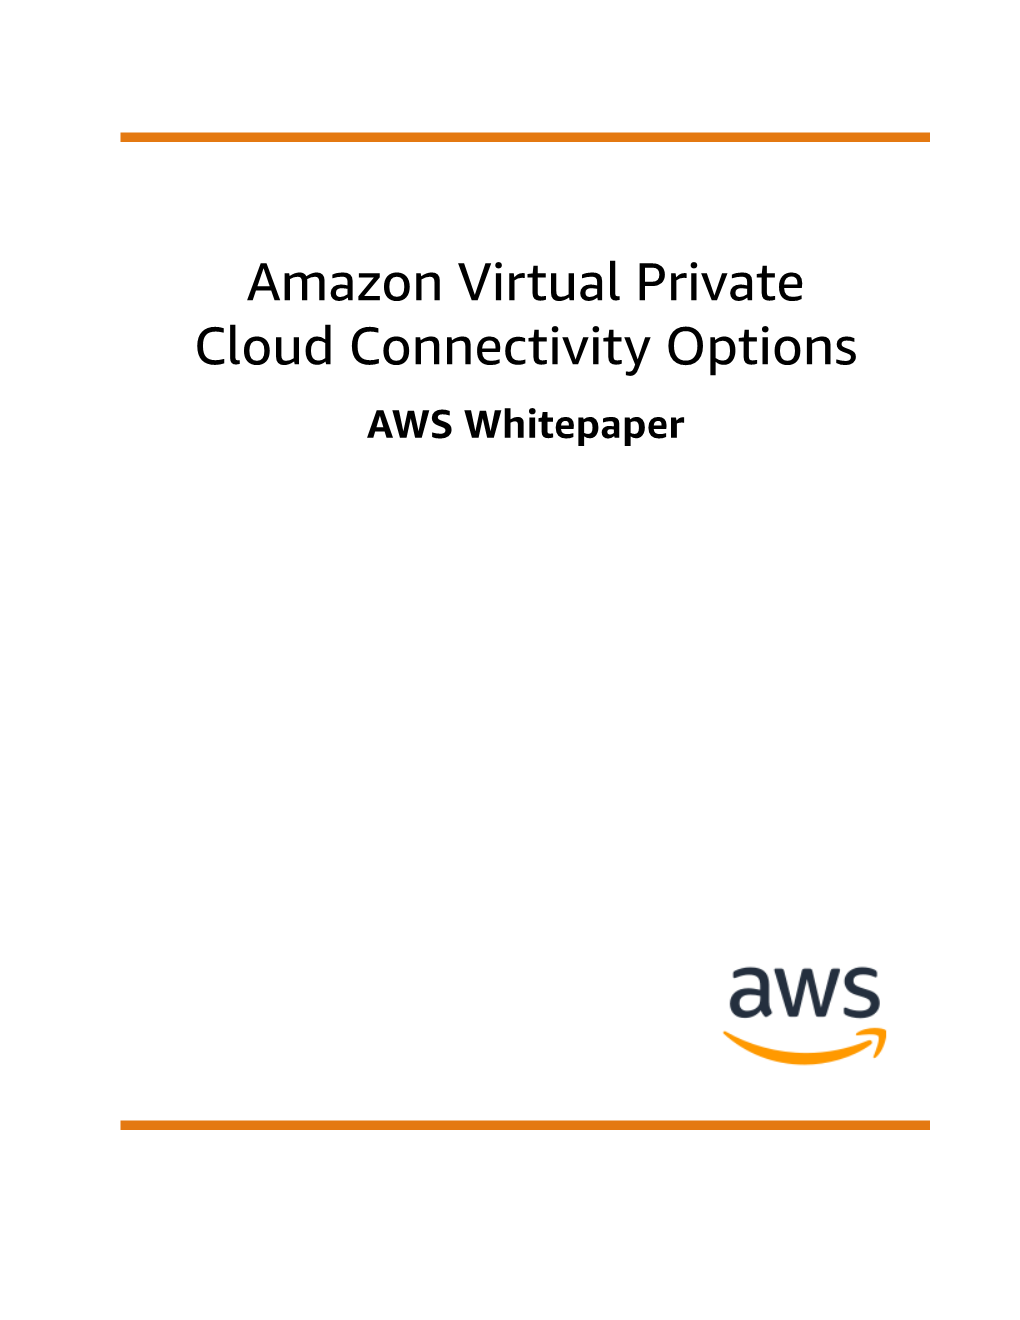 Amazon Virtual Private Cloud Connectivity Options AWS Whitepaper Amazon Virtual Private Cloud Connectivity Options AWS Whitepaper